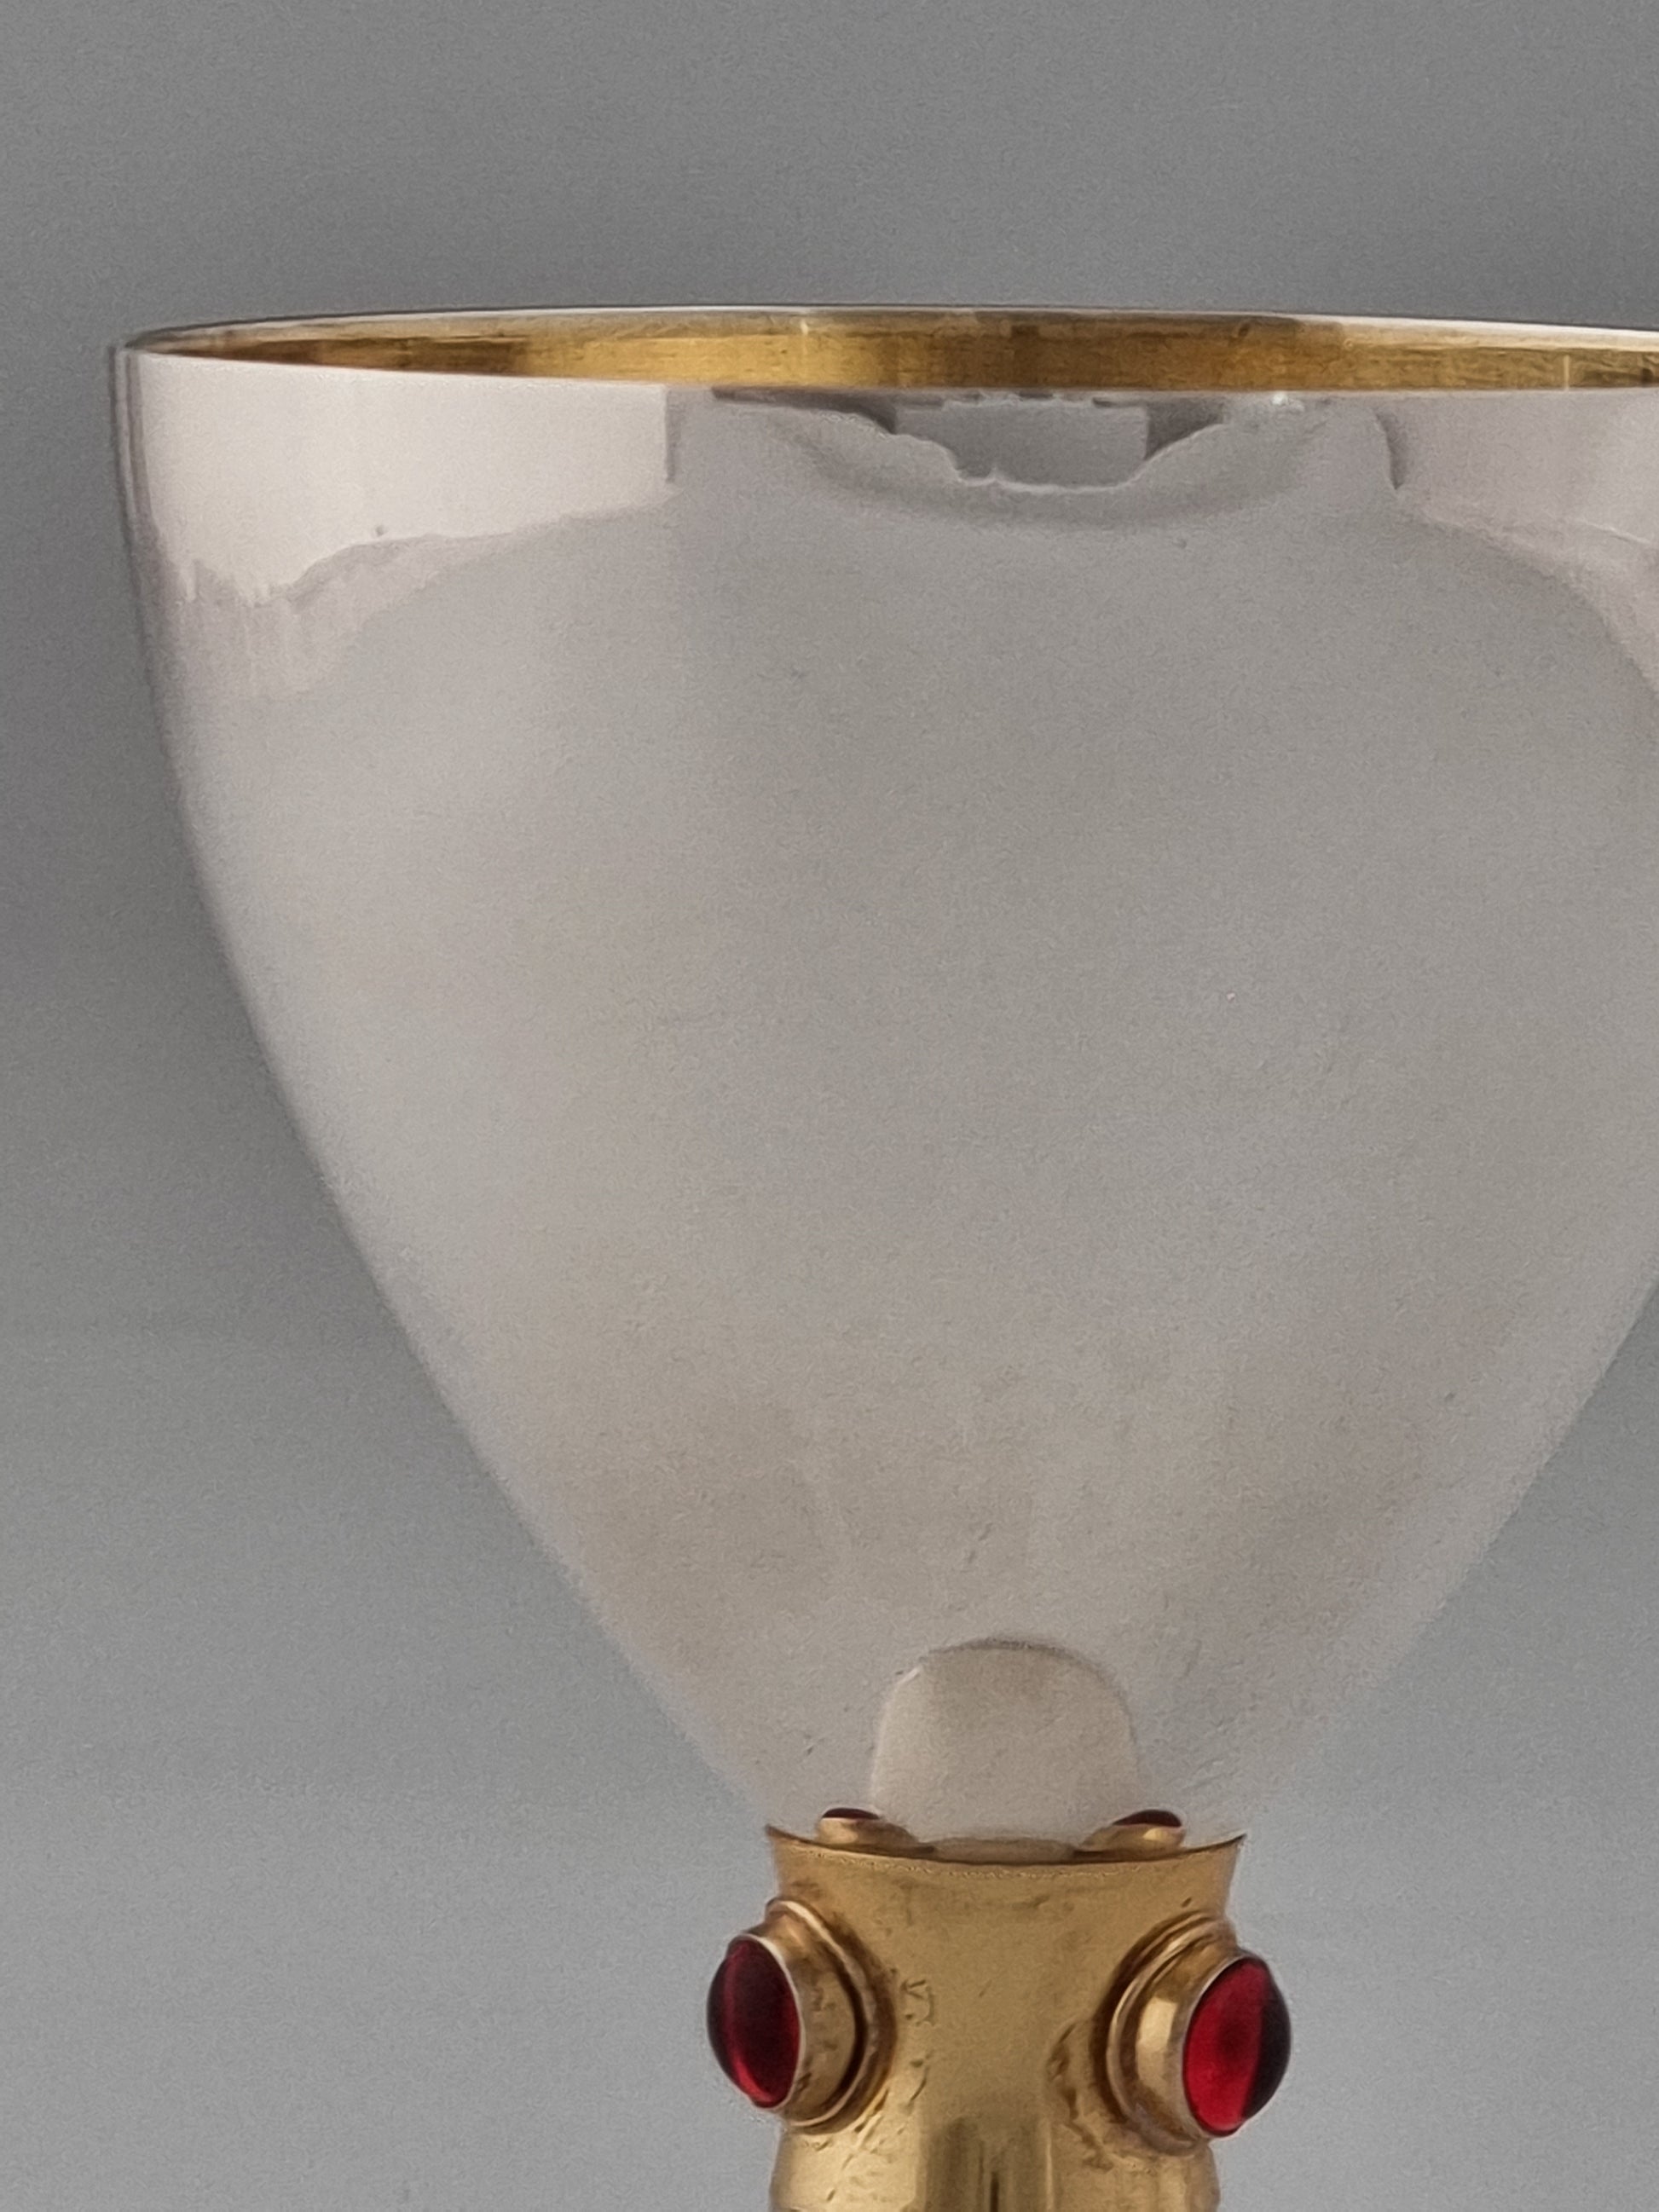 Close-up of Deborah Kiddush cup made in Jerusalem by Yemini silversmiths. A golden ribbon in the center bears three garnet stones